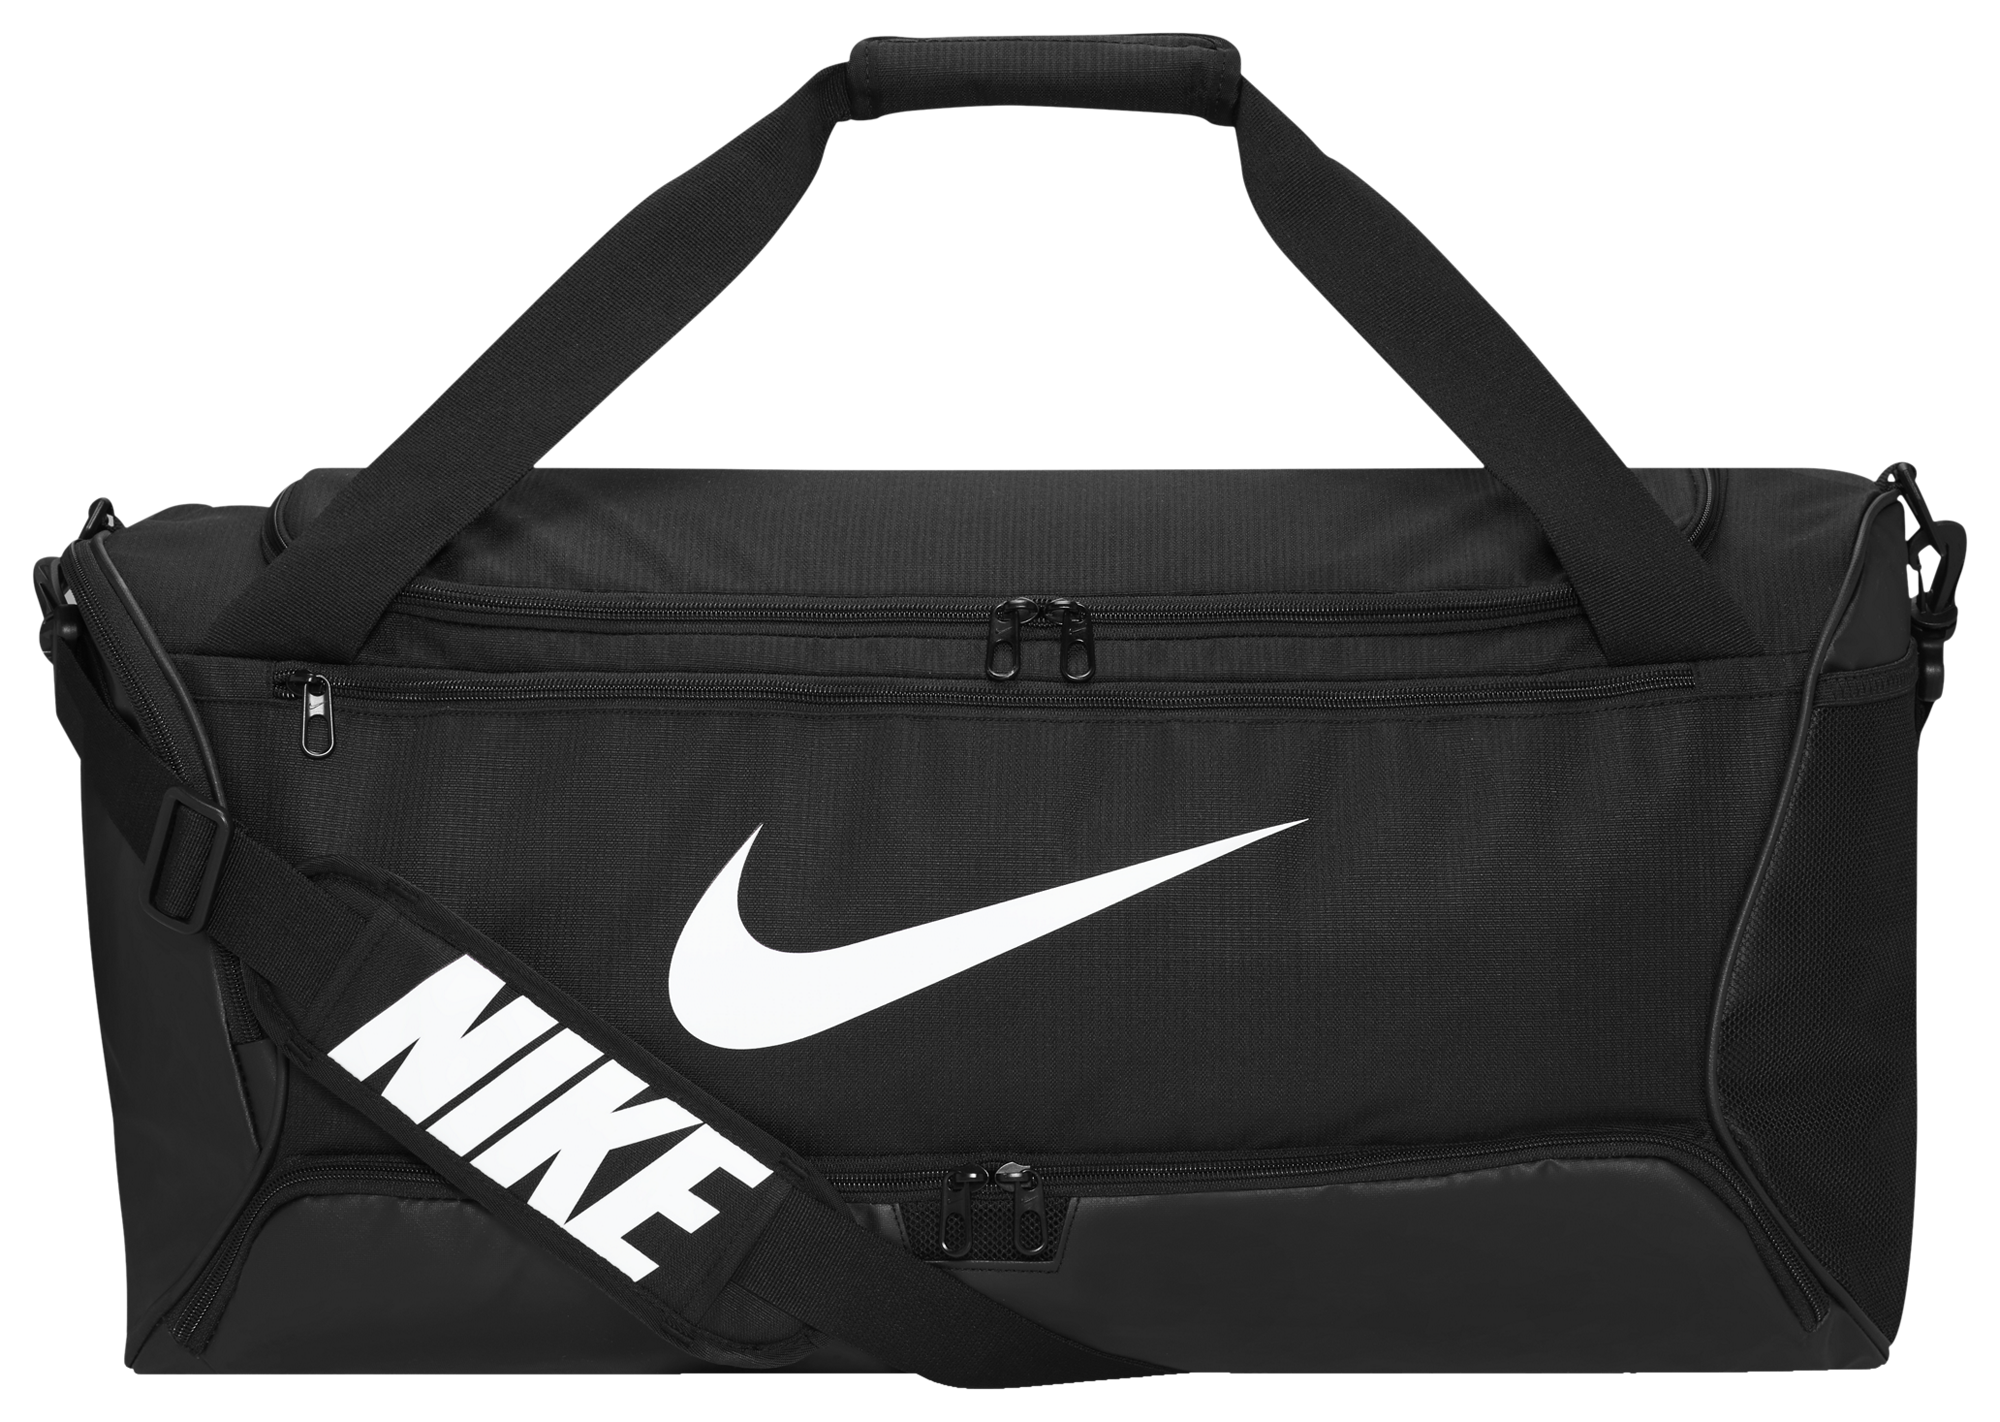 Nike Brasilia 6 Small Duffel Bag  Bags, Nike duffle bag, Nike free shoes